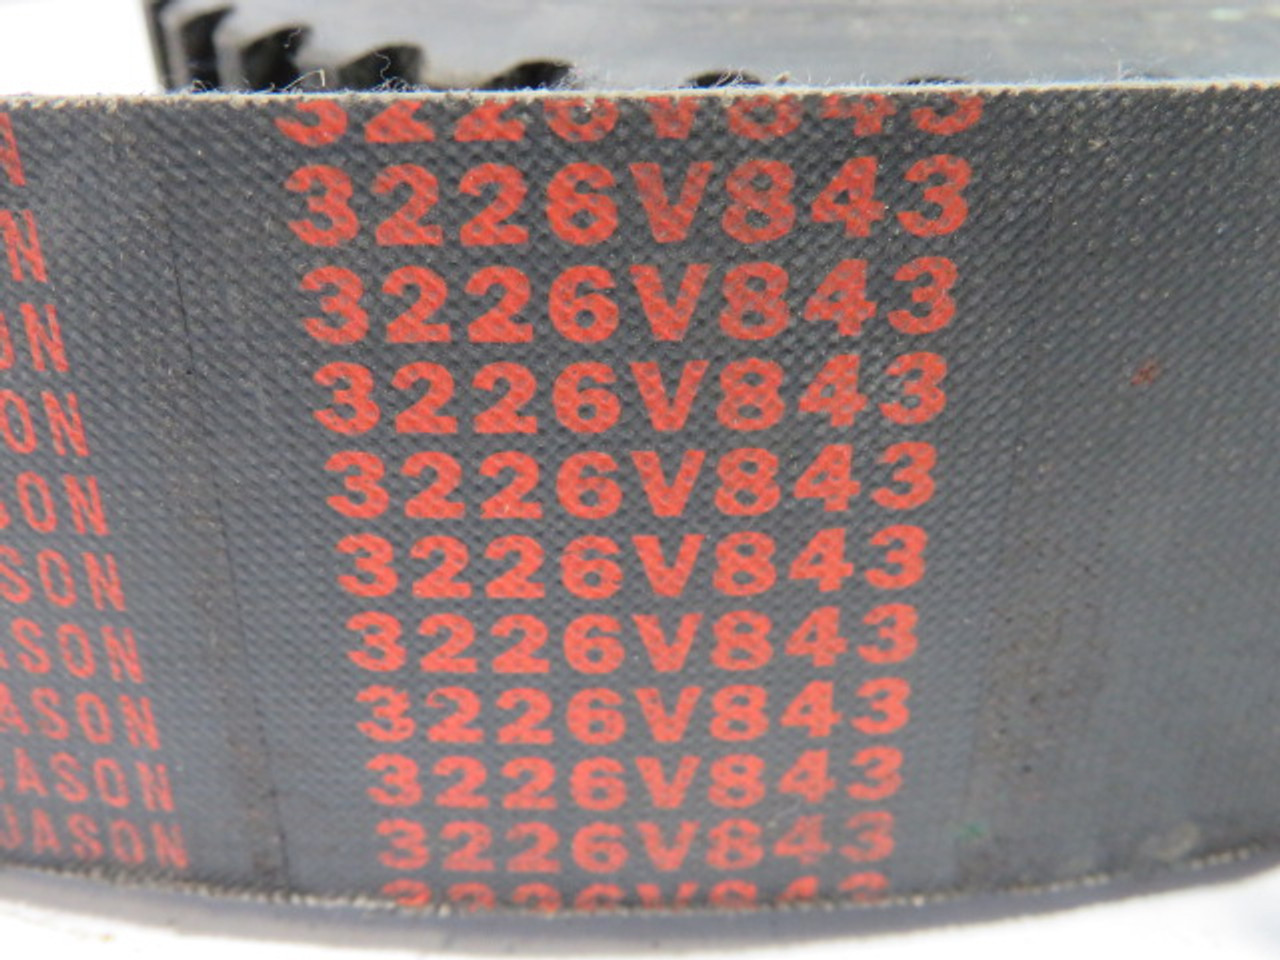 Jason 3226V843 Variable Speed Belt 2" Belt W x 84.3" Pitch L ! NOP !